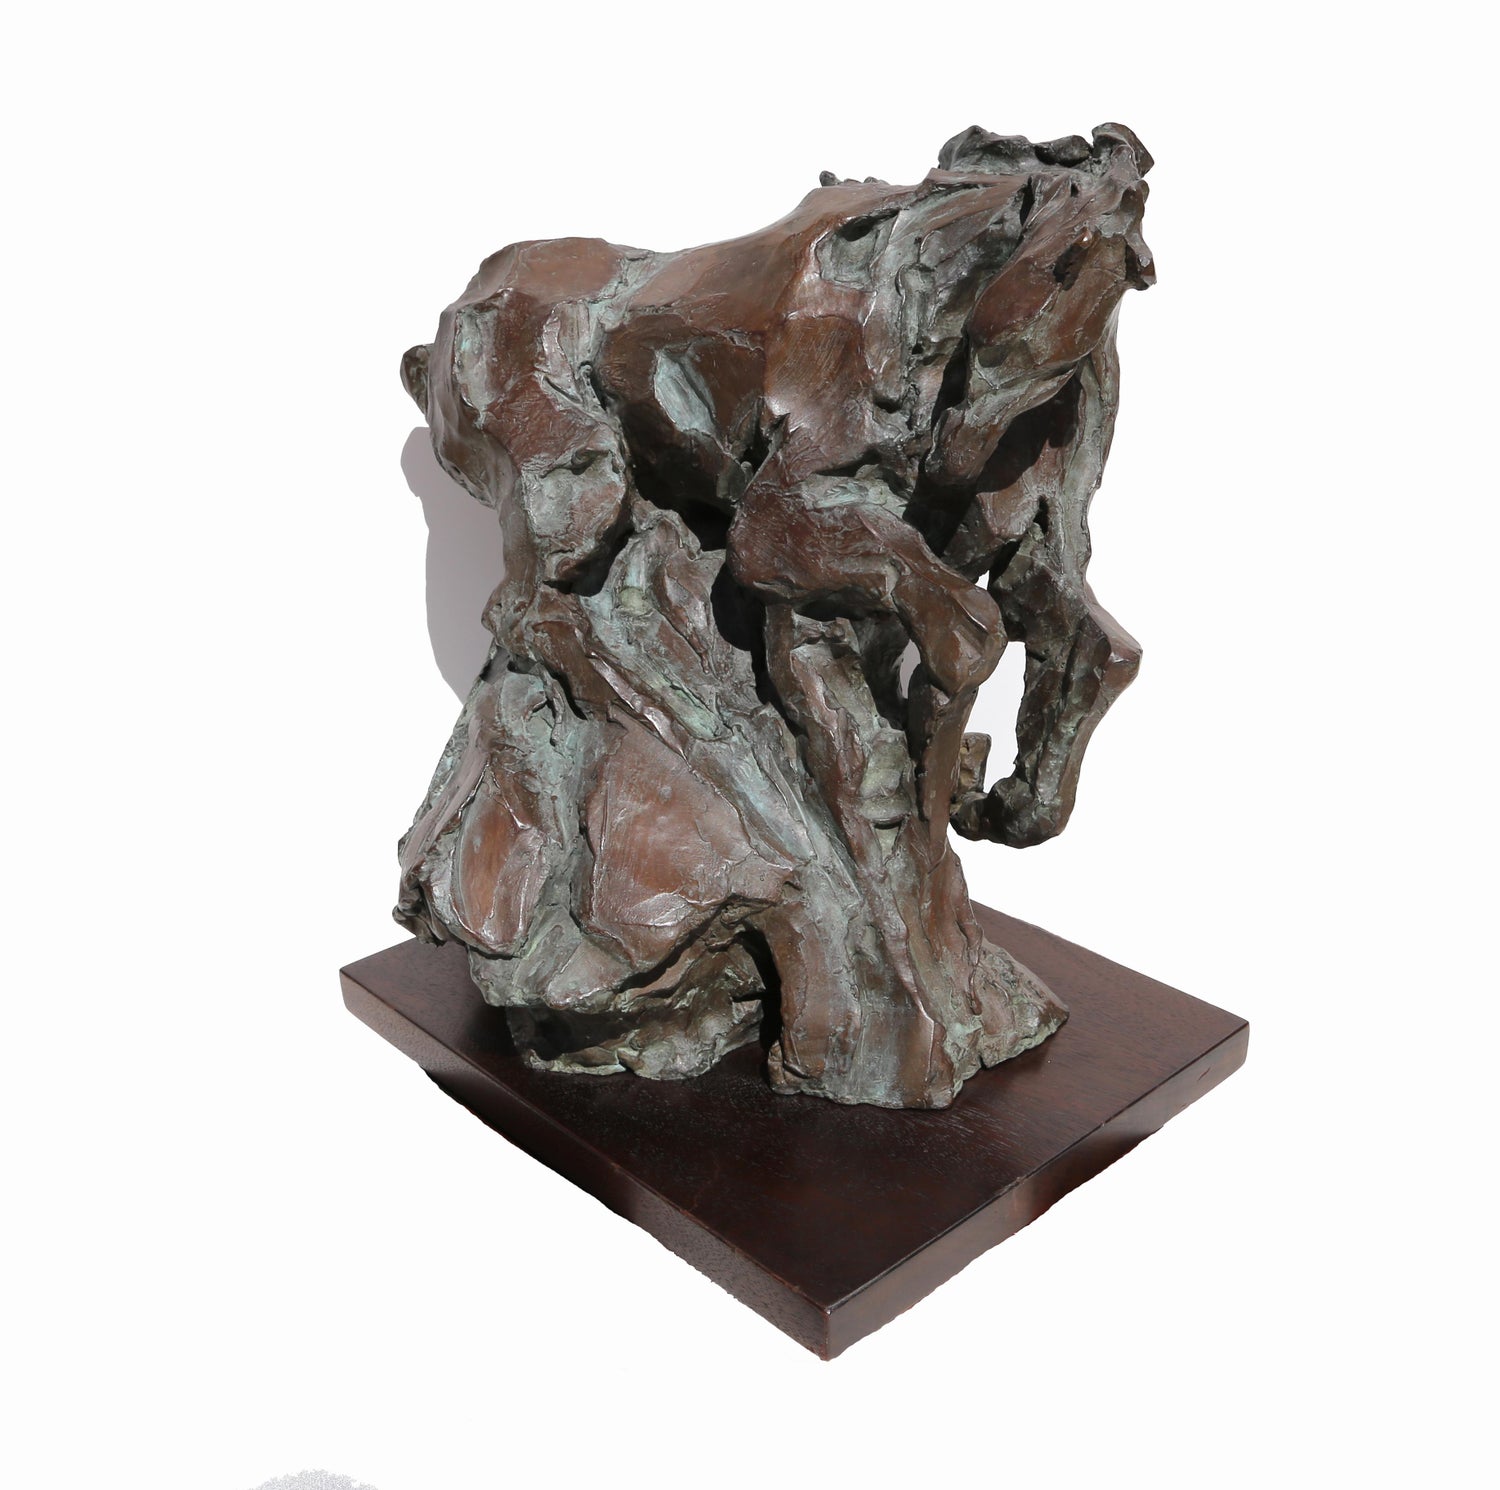 Genesis Sculpture - 10 For Sale on 1stDibs